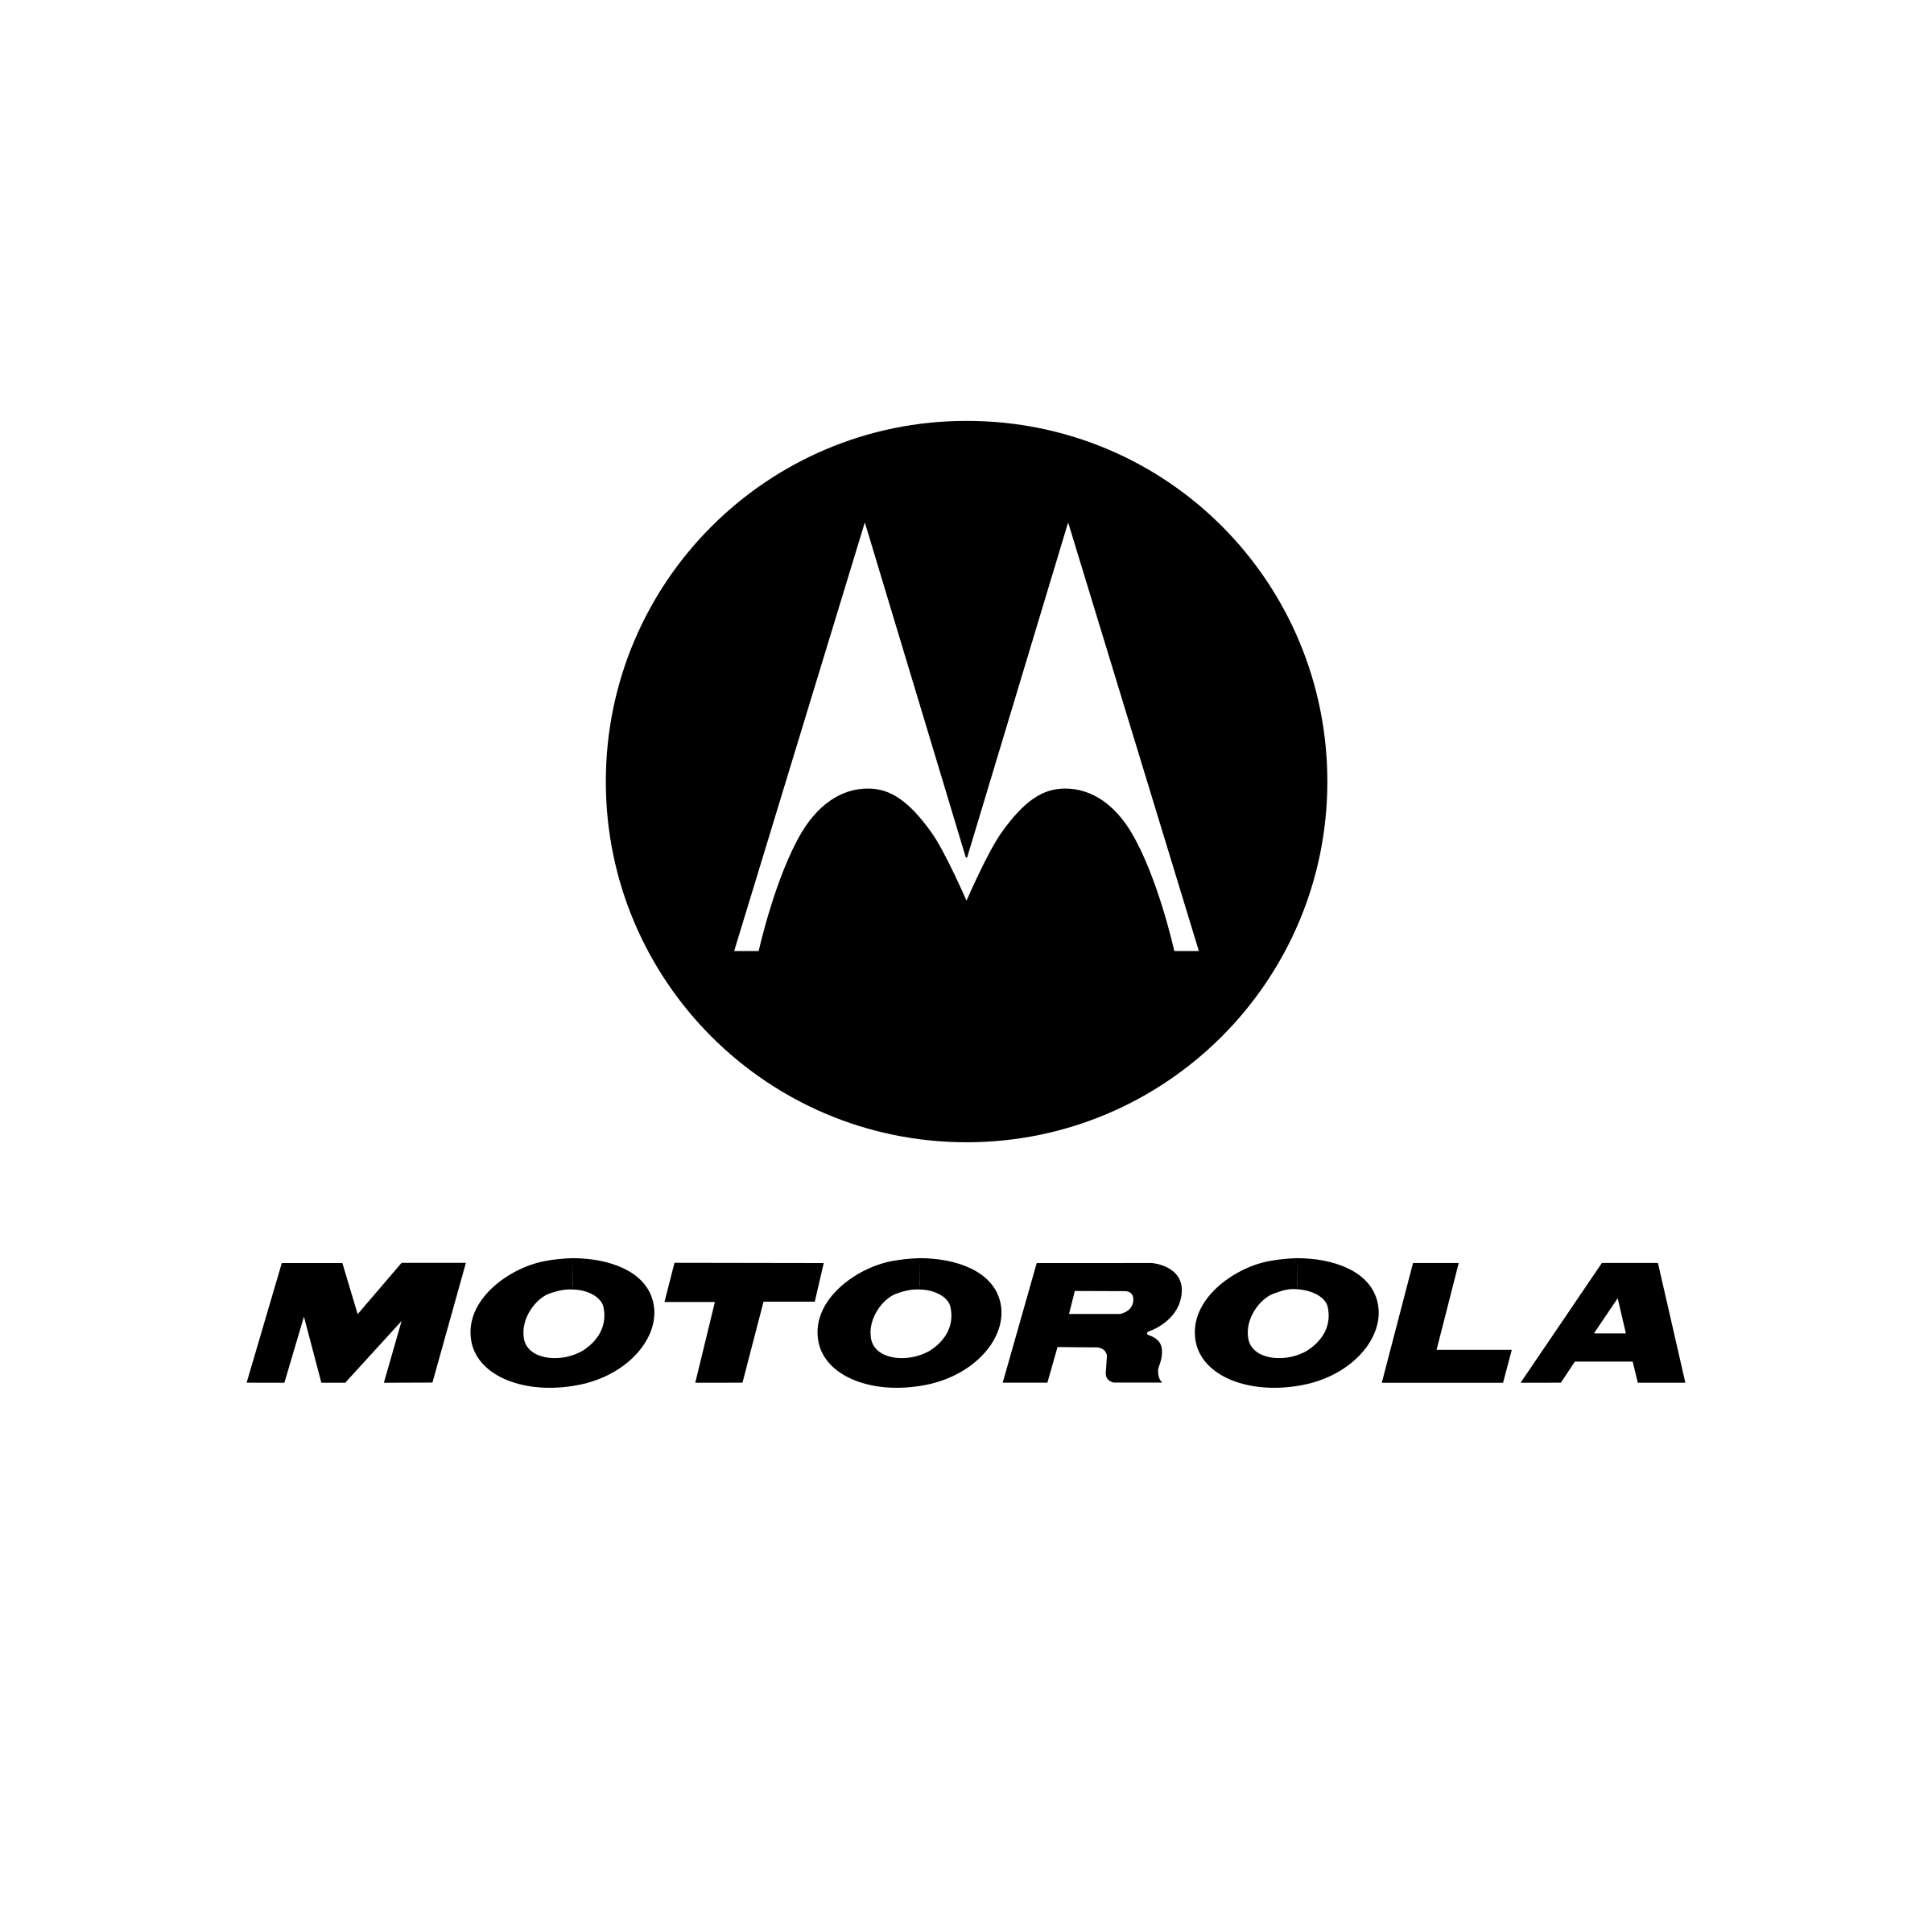 motorola-2-logo-png-transparent